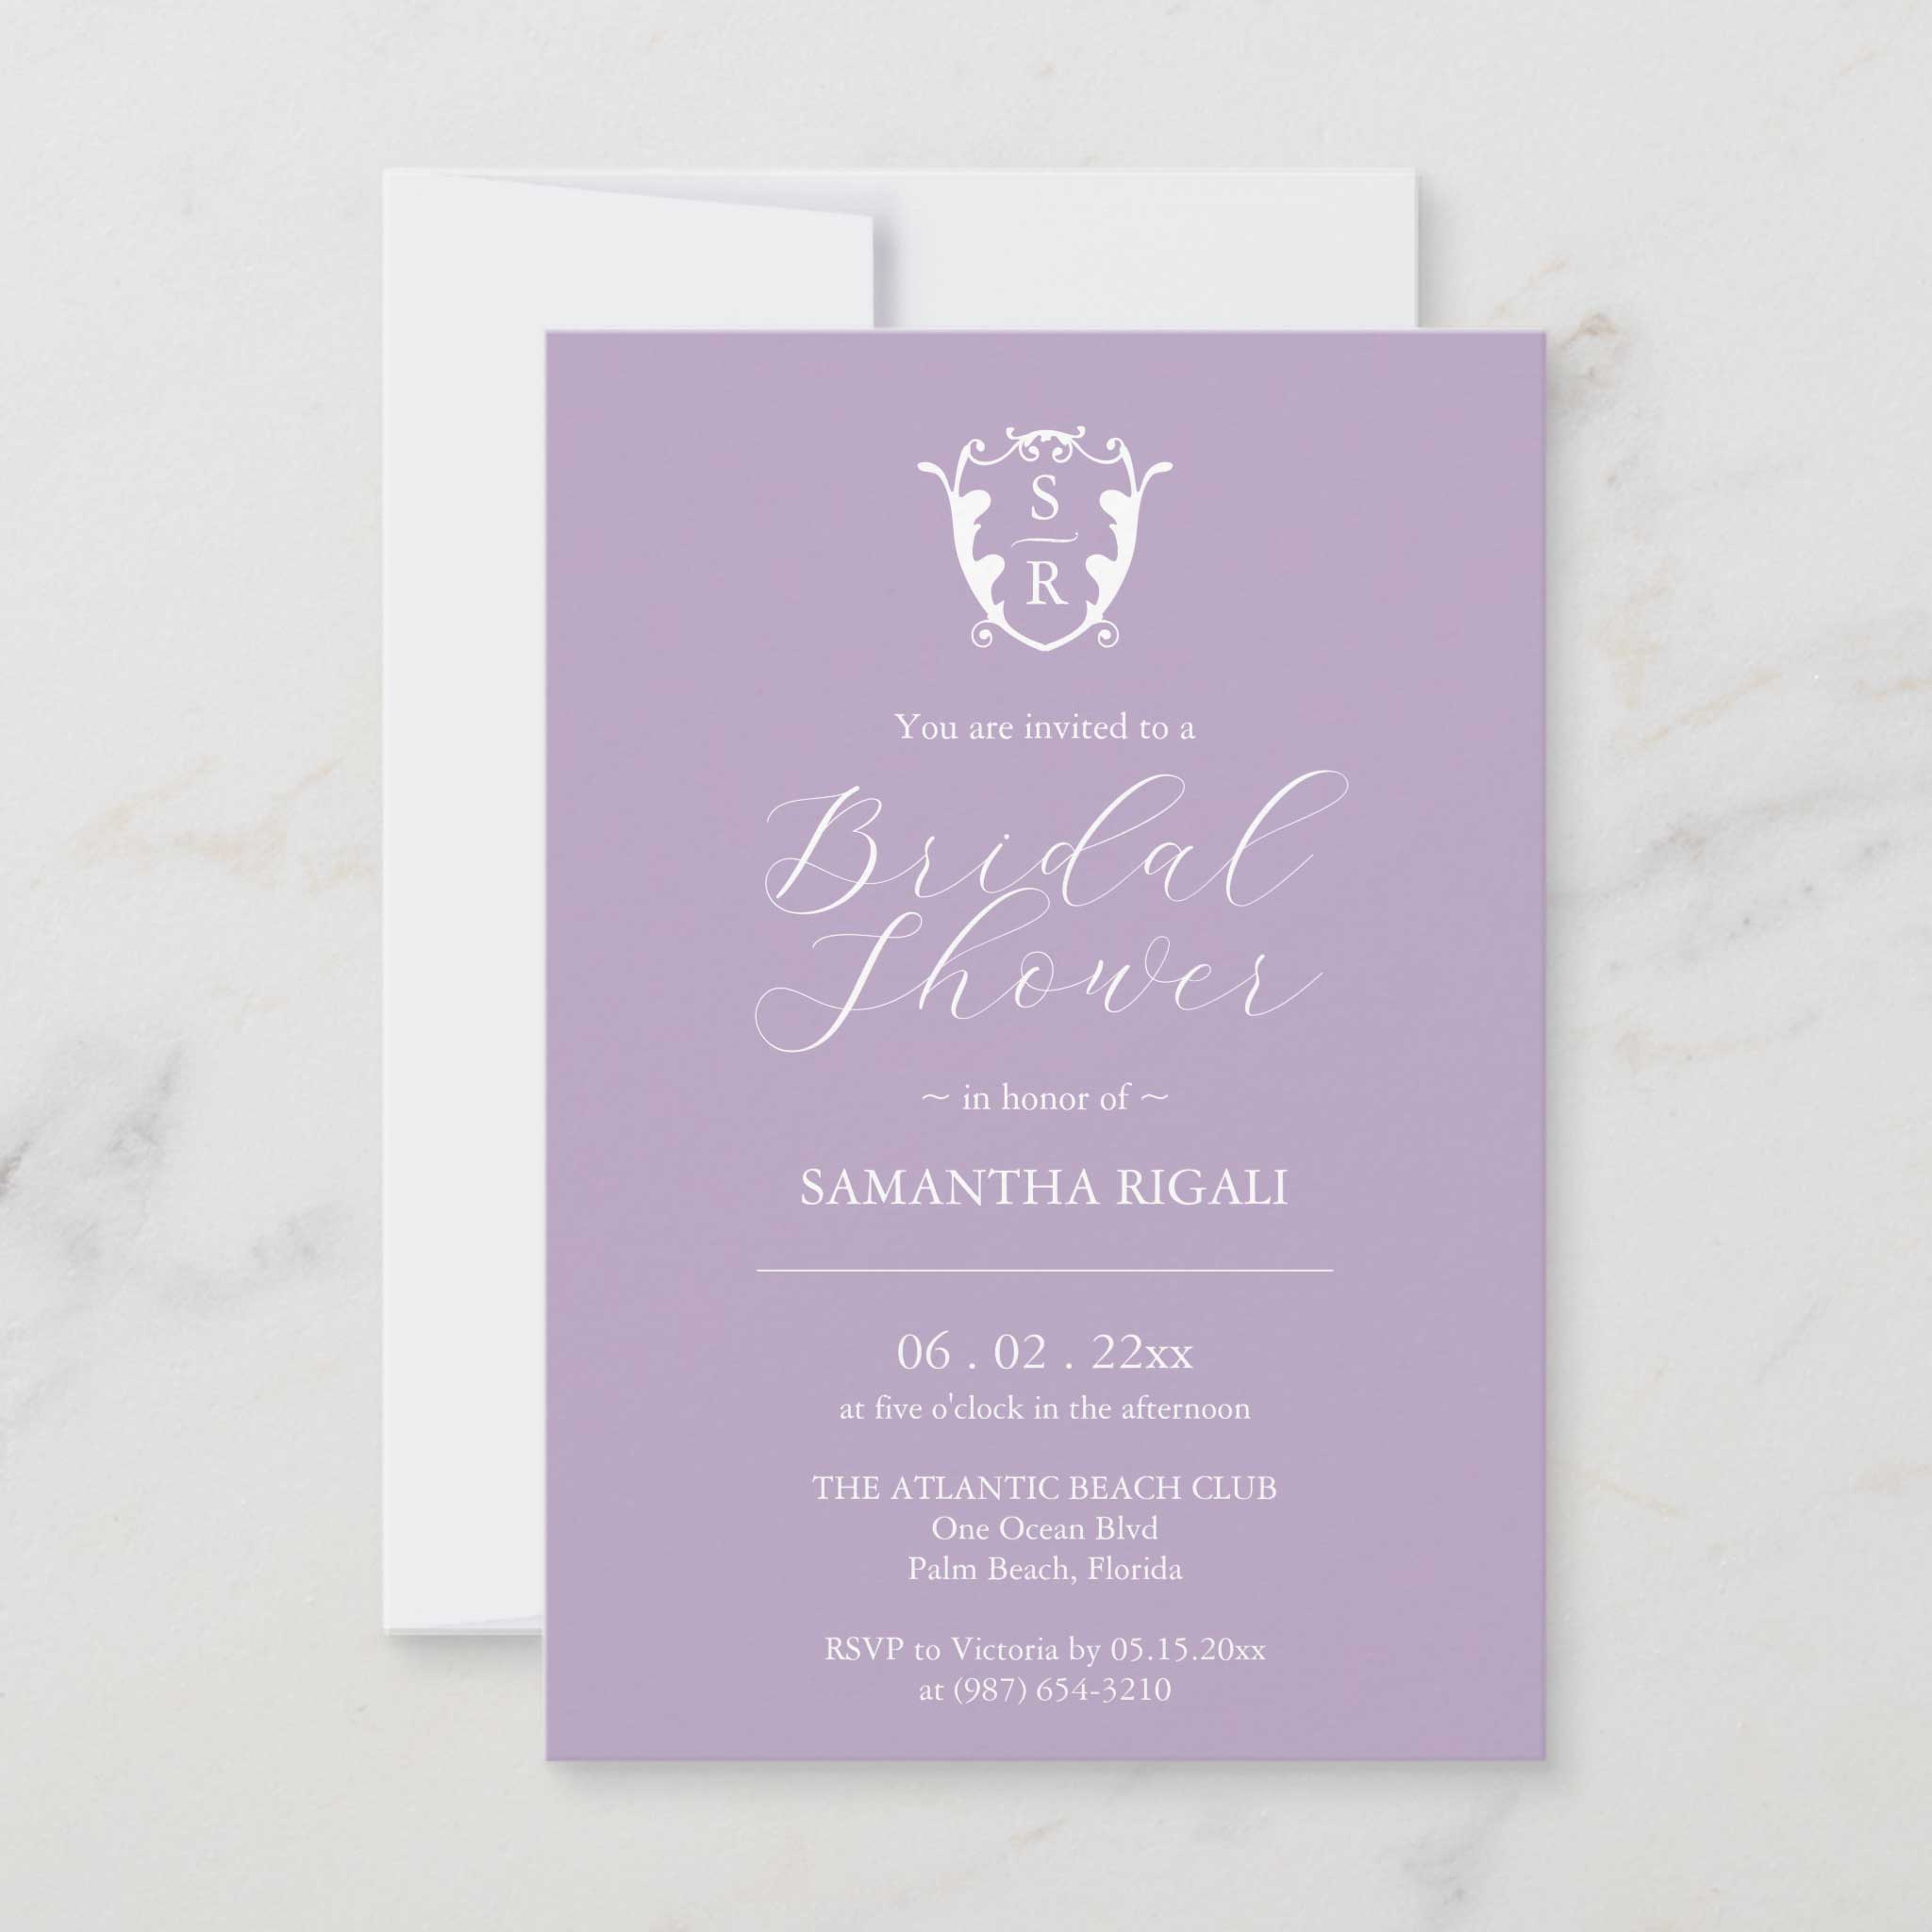 purple bridal shower invitations feature monogram crest. Click to shop.